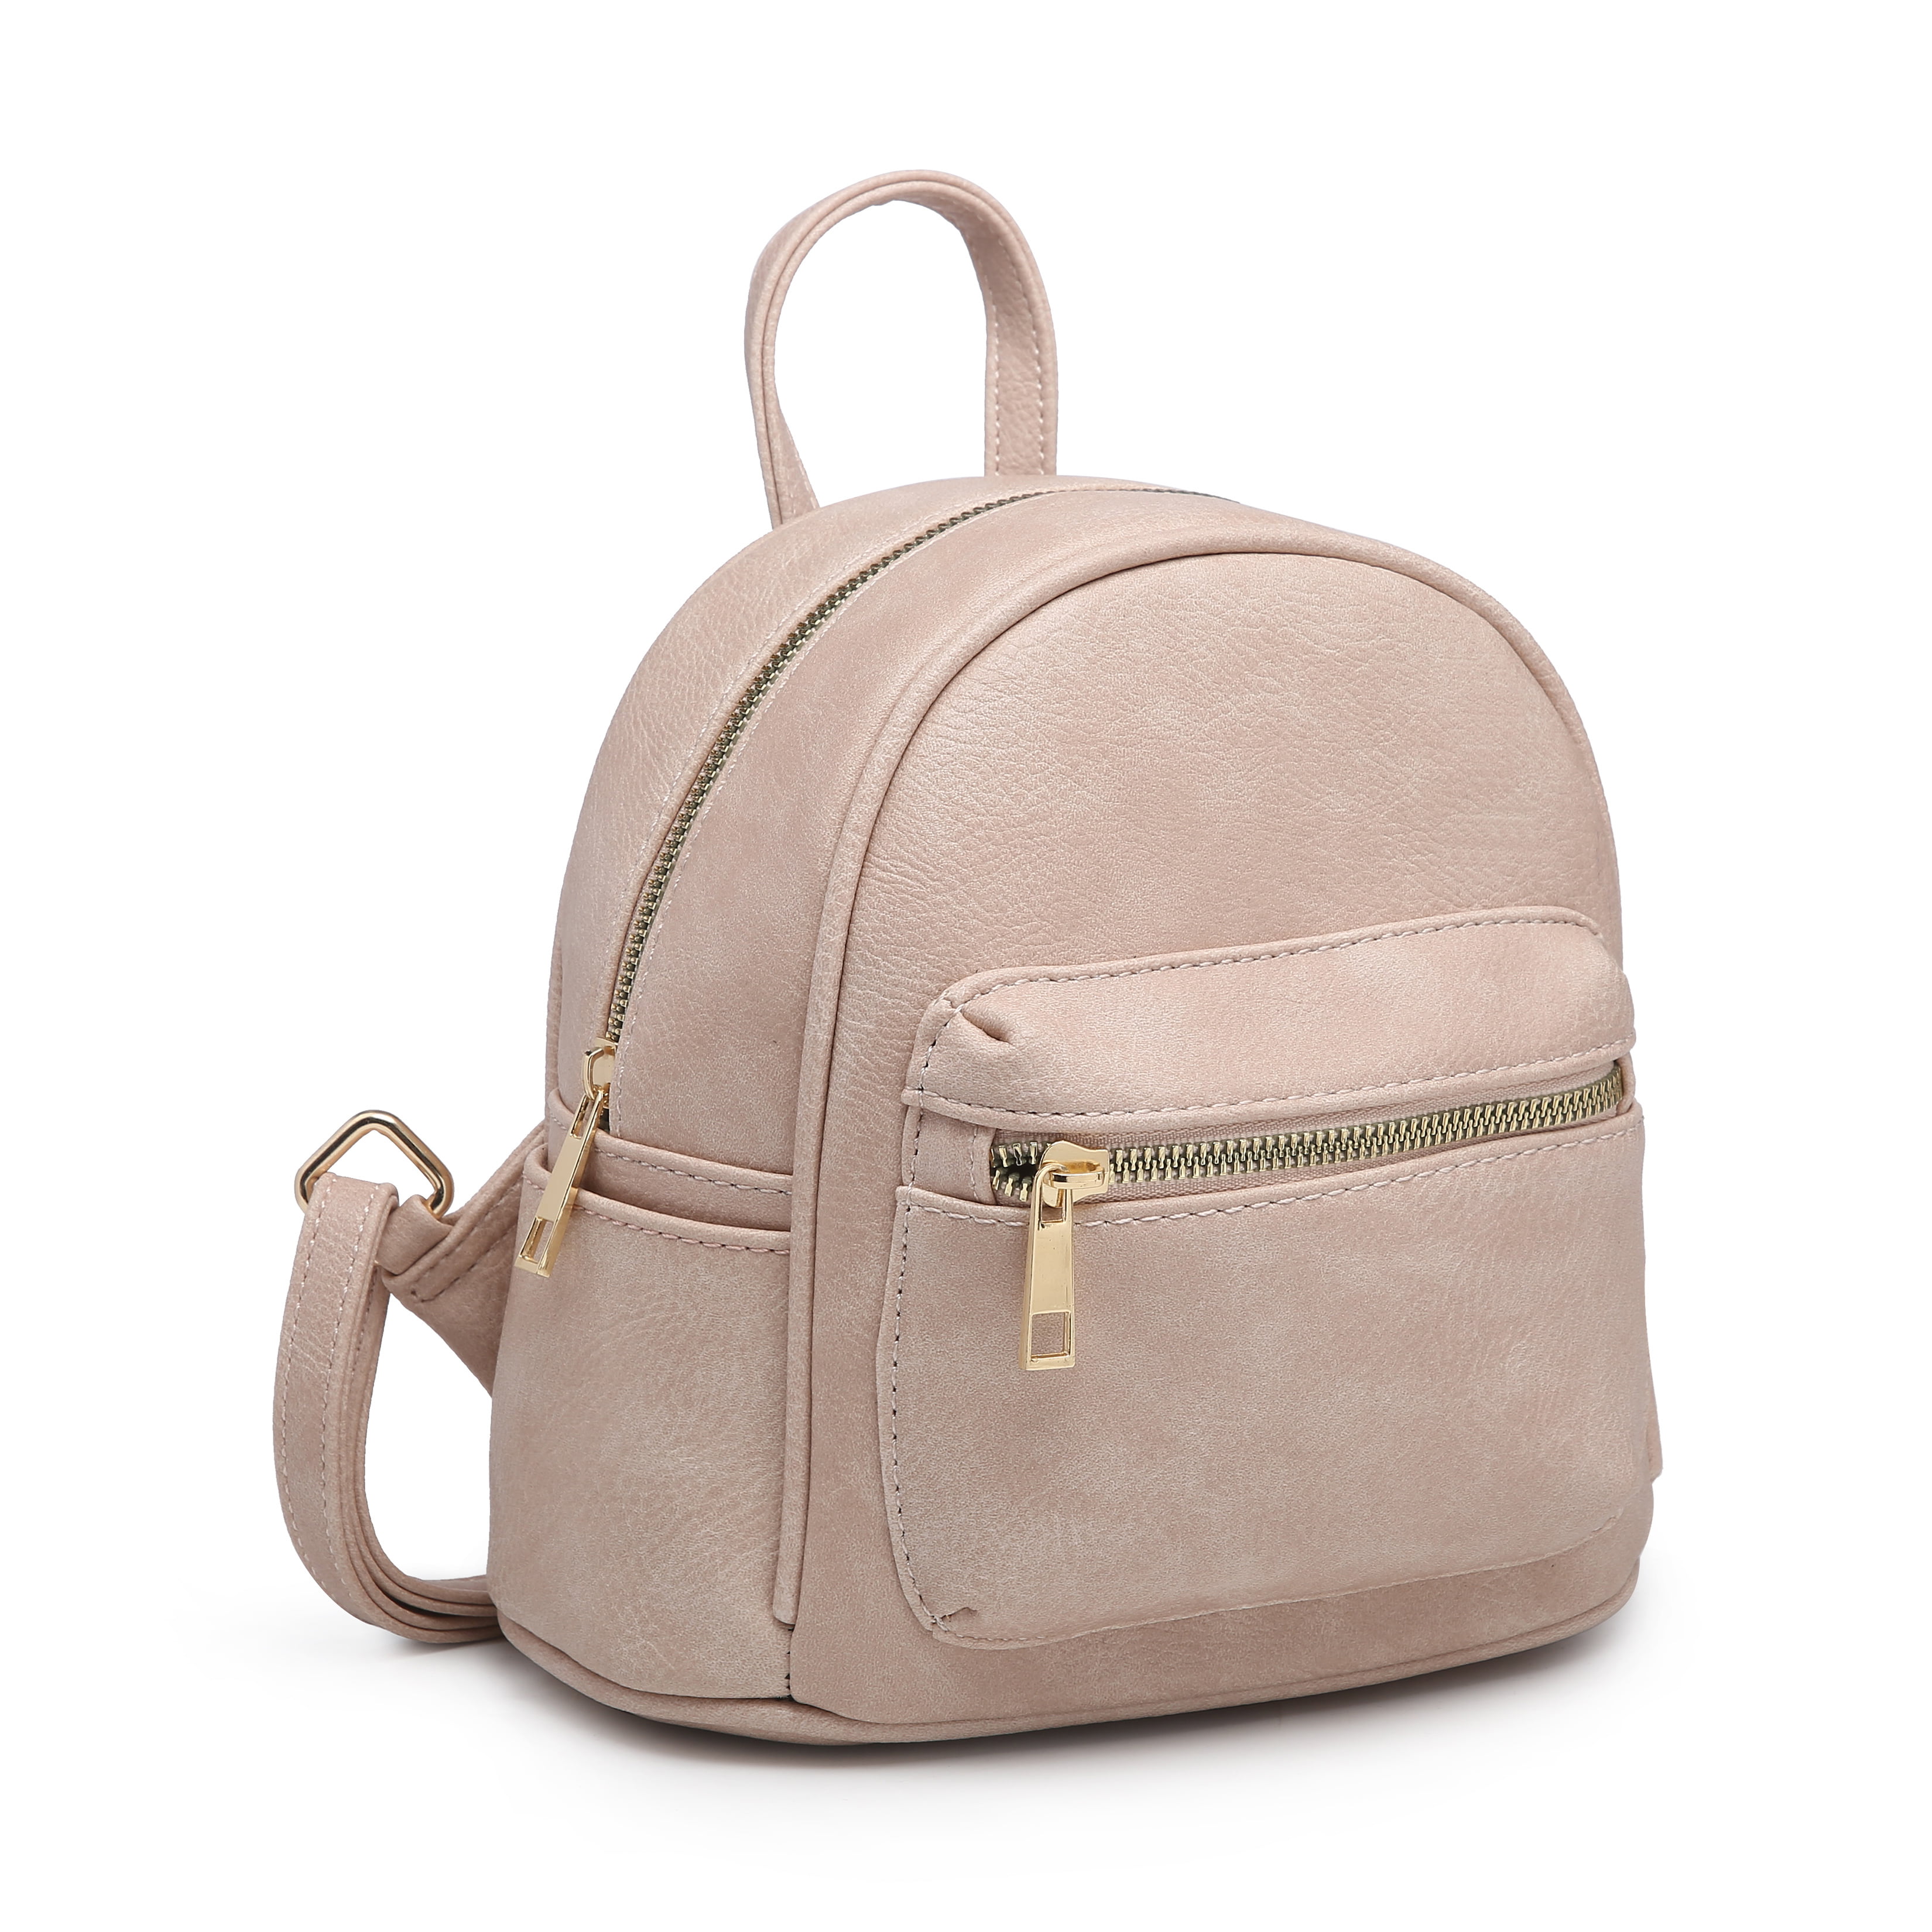 Leather school Backpacks Female Feminine Casual Large Capacity Shoulder Bags,Gold